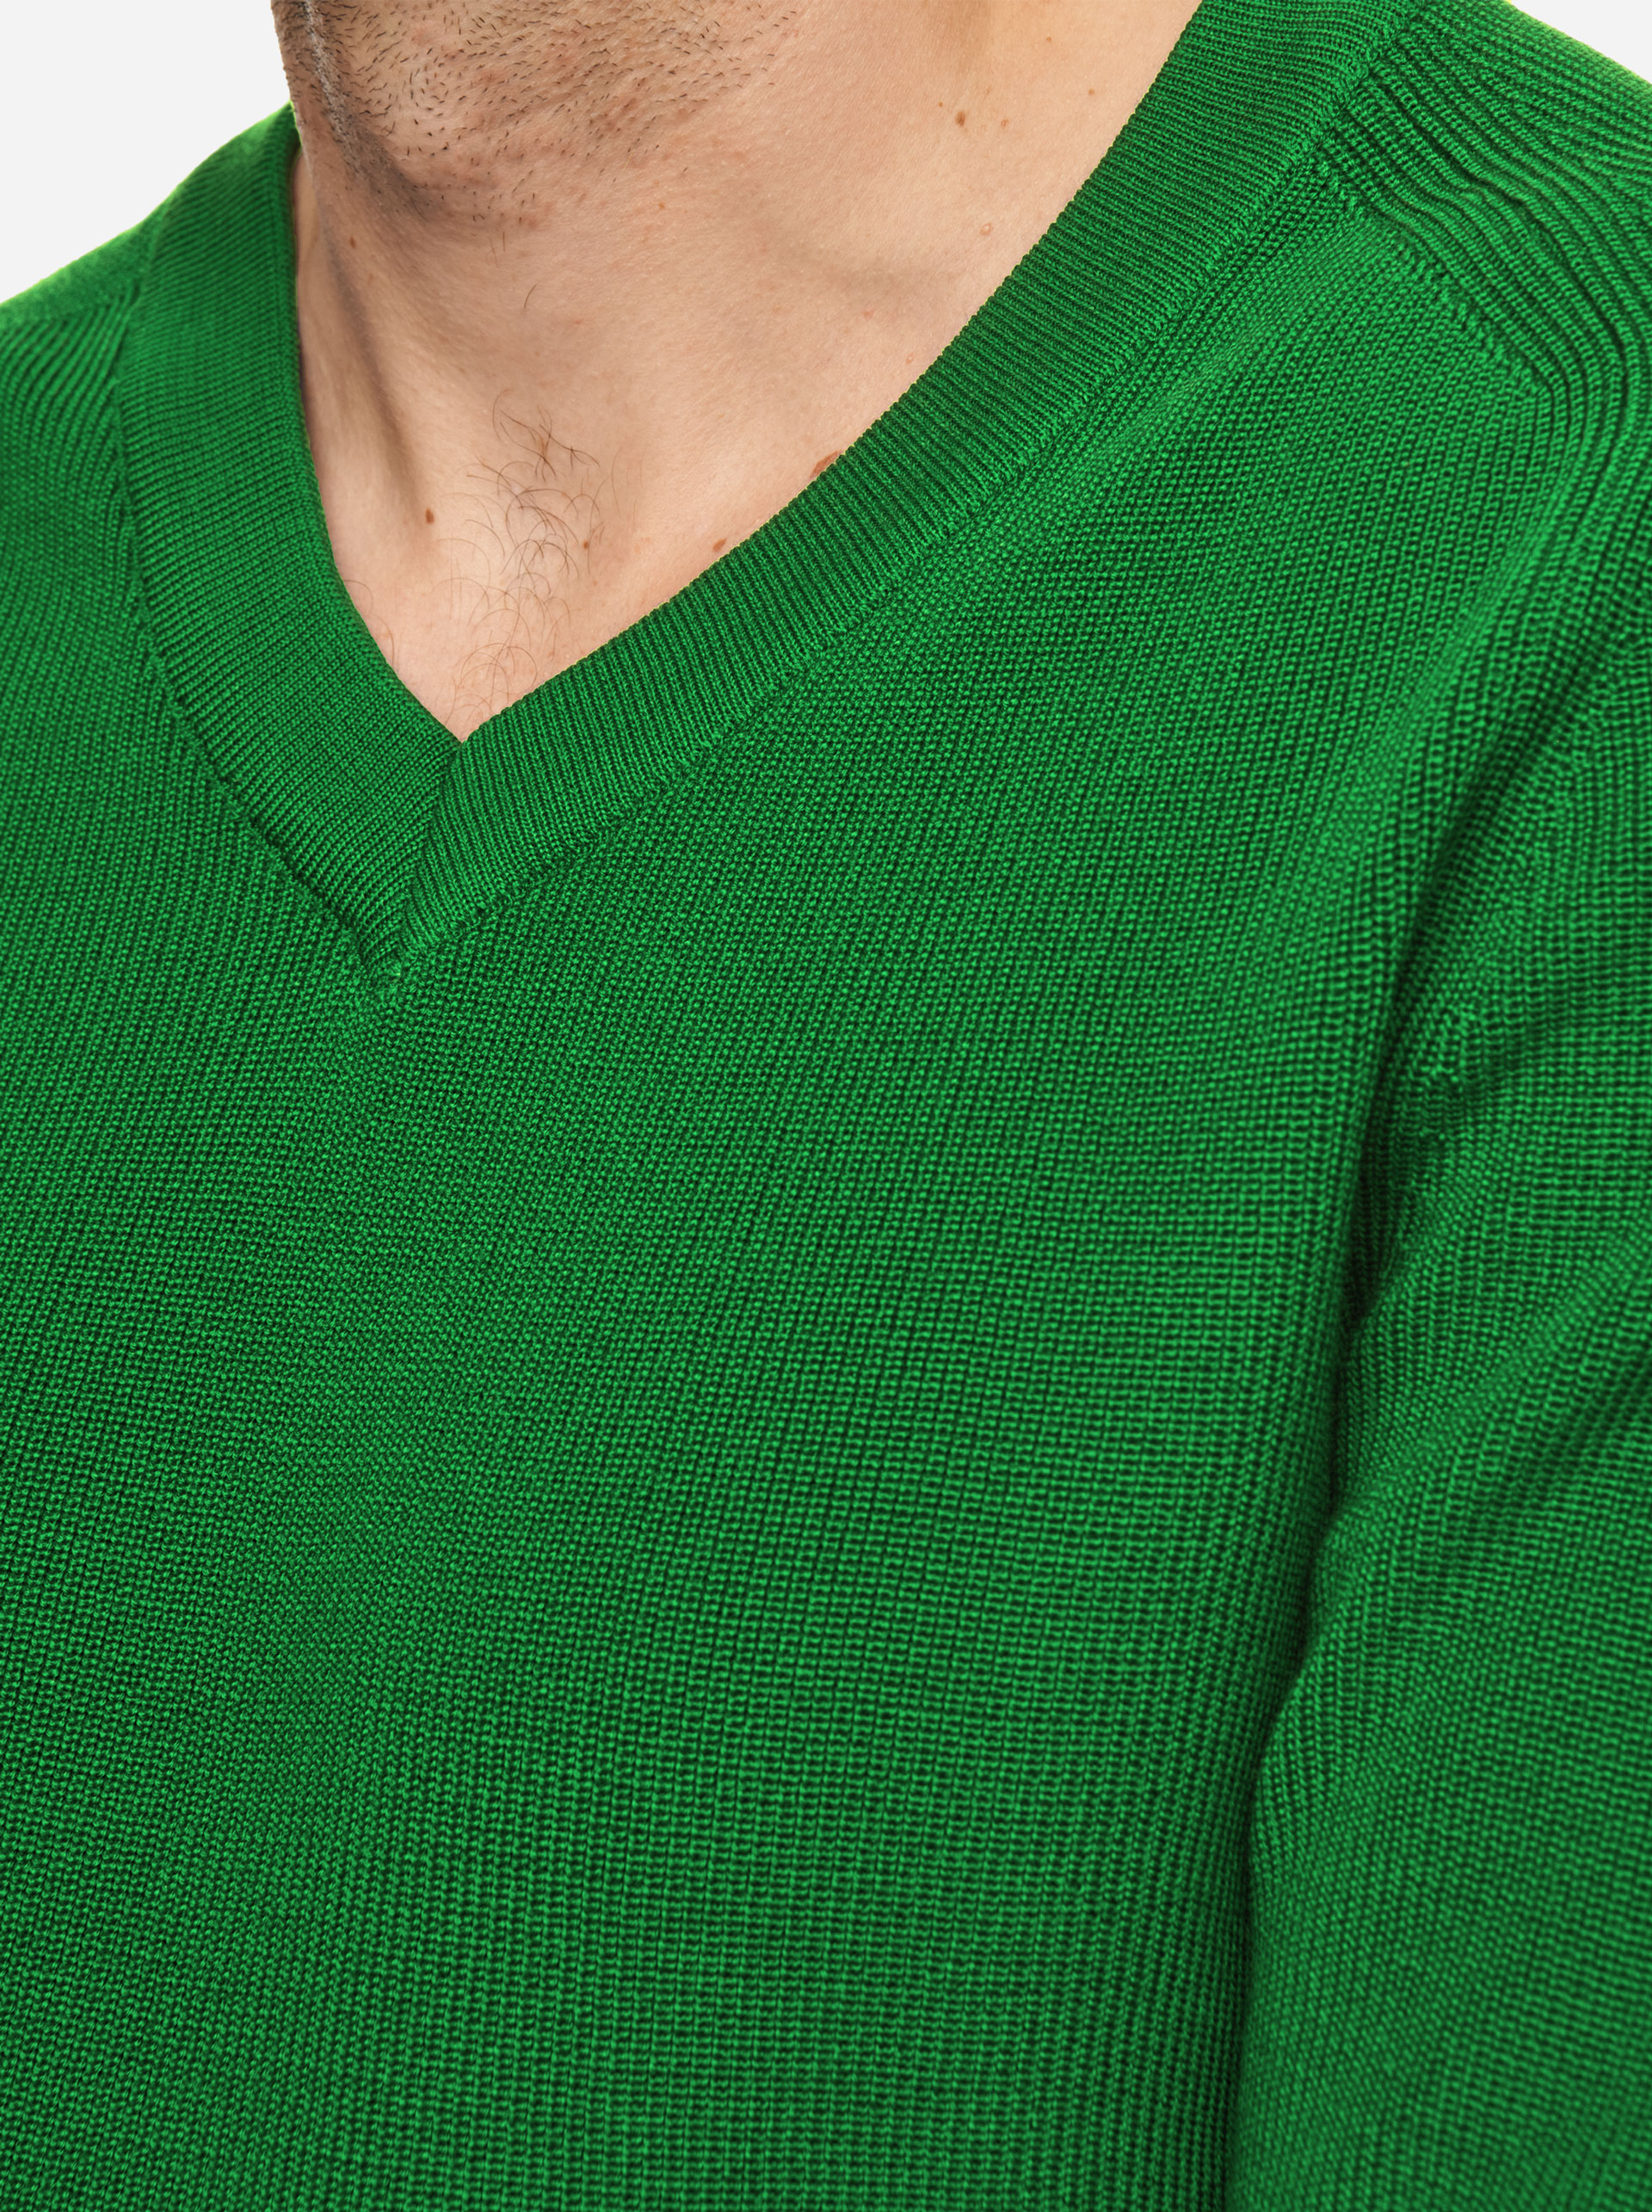 Teym - V-Neck - The Merino Sweater - Men - Bright Green - 3